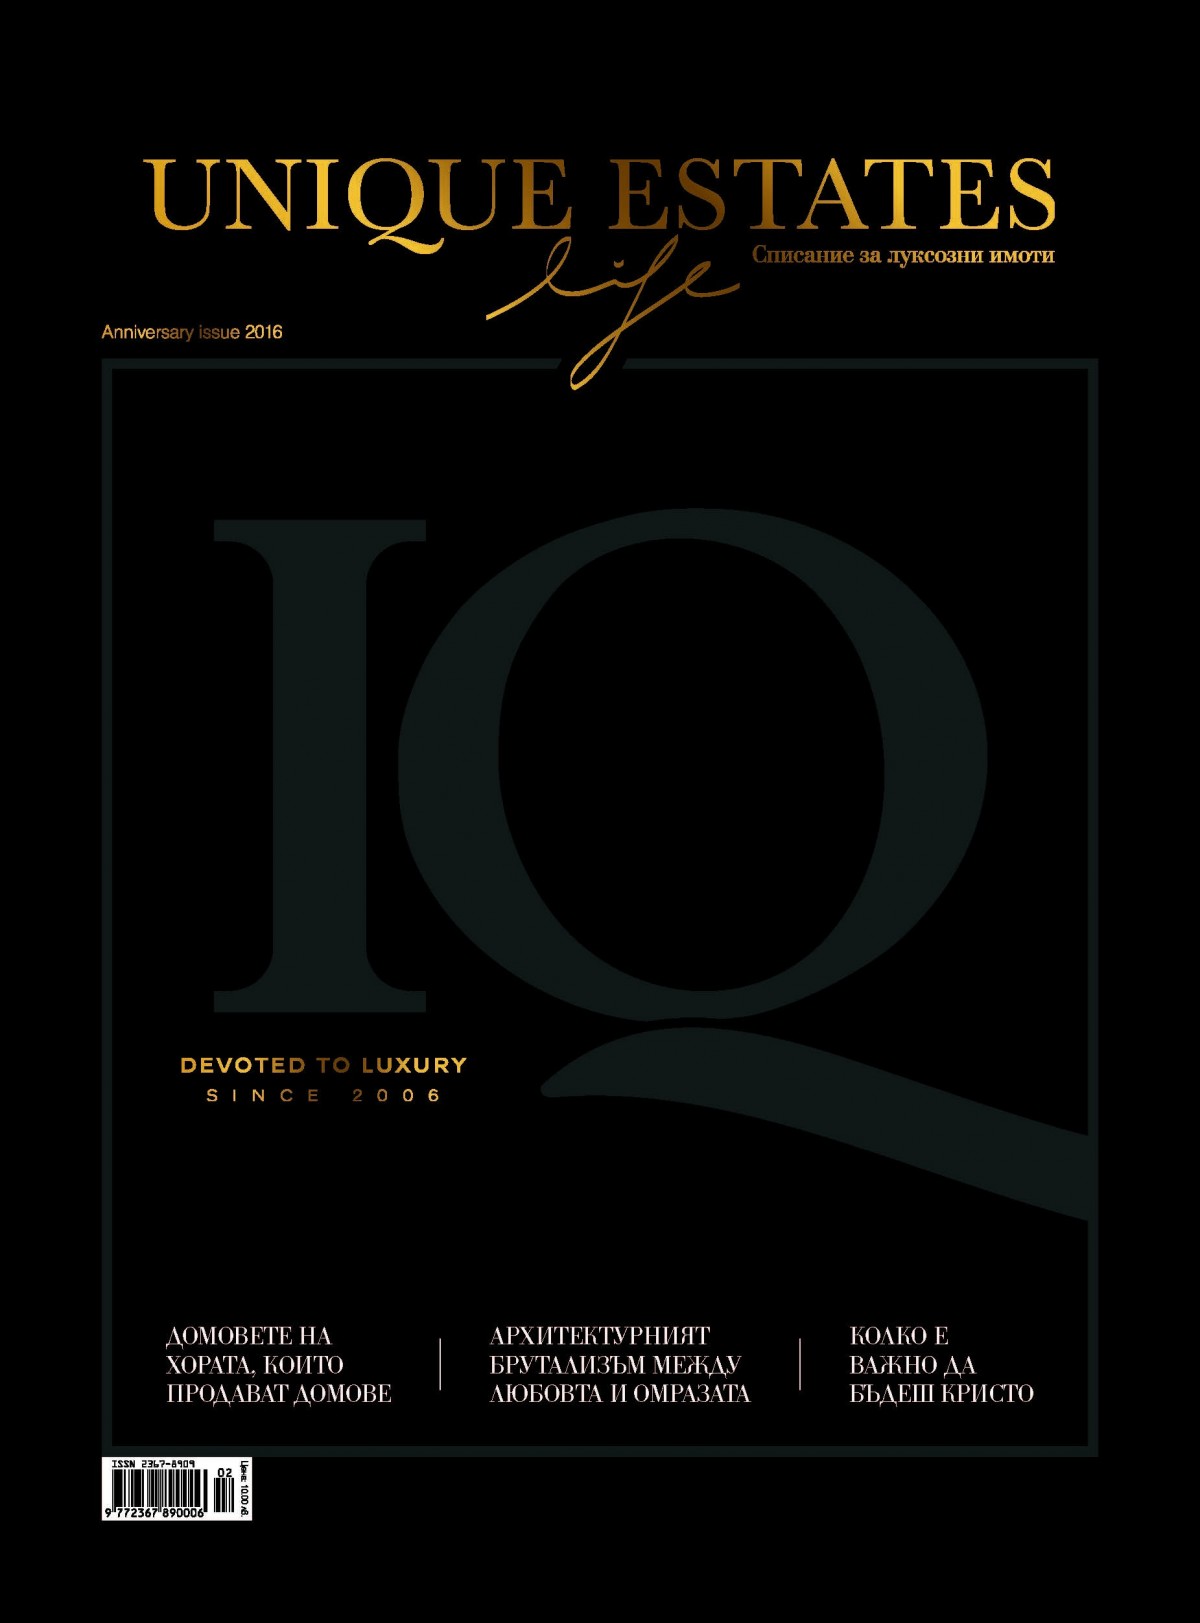 Anniversary Issue 2016